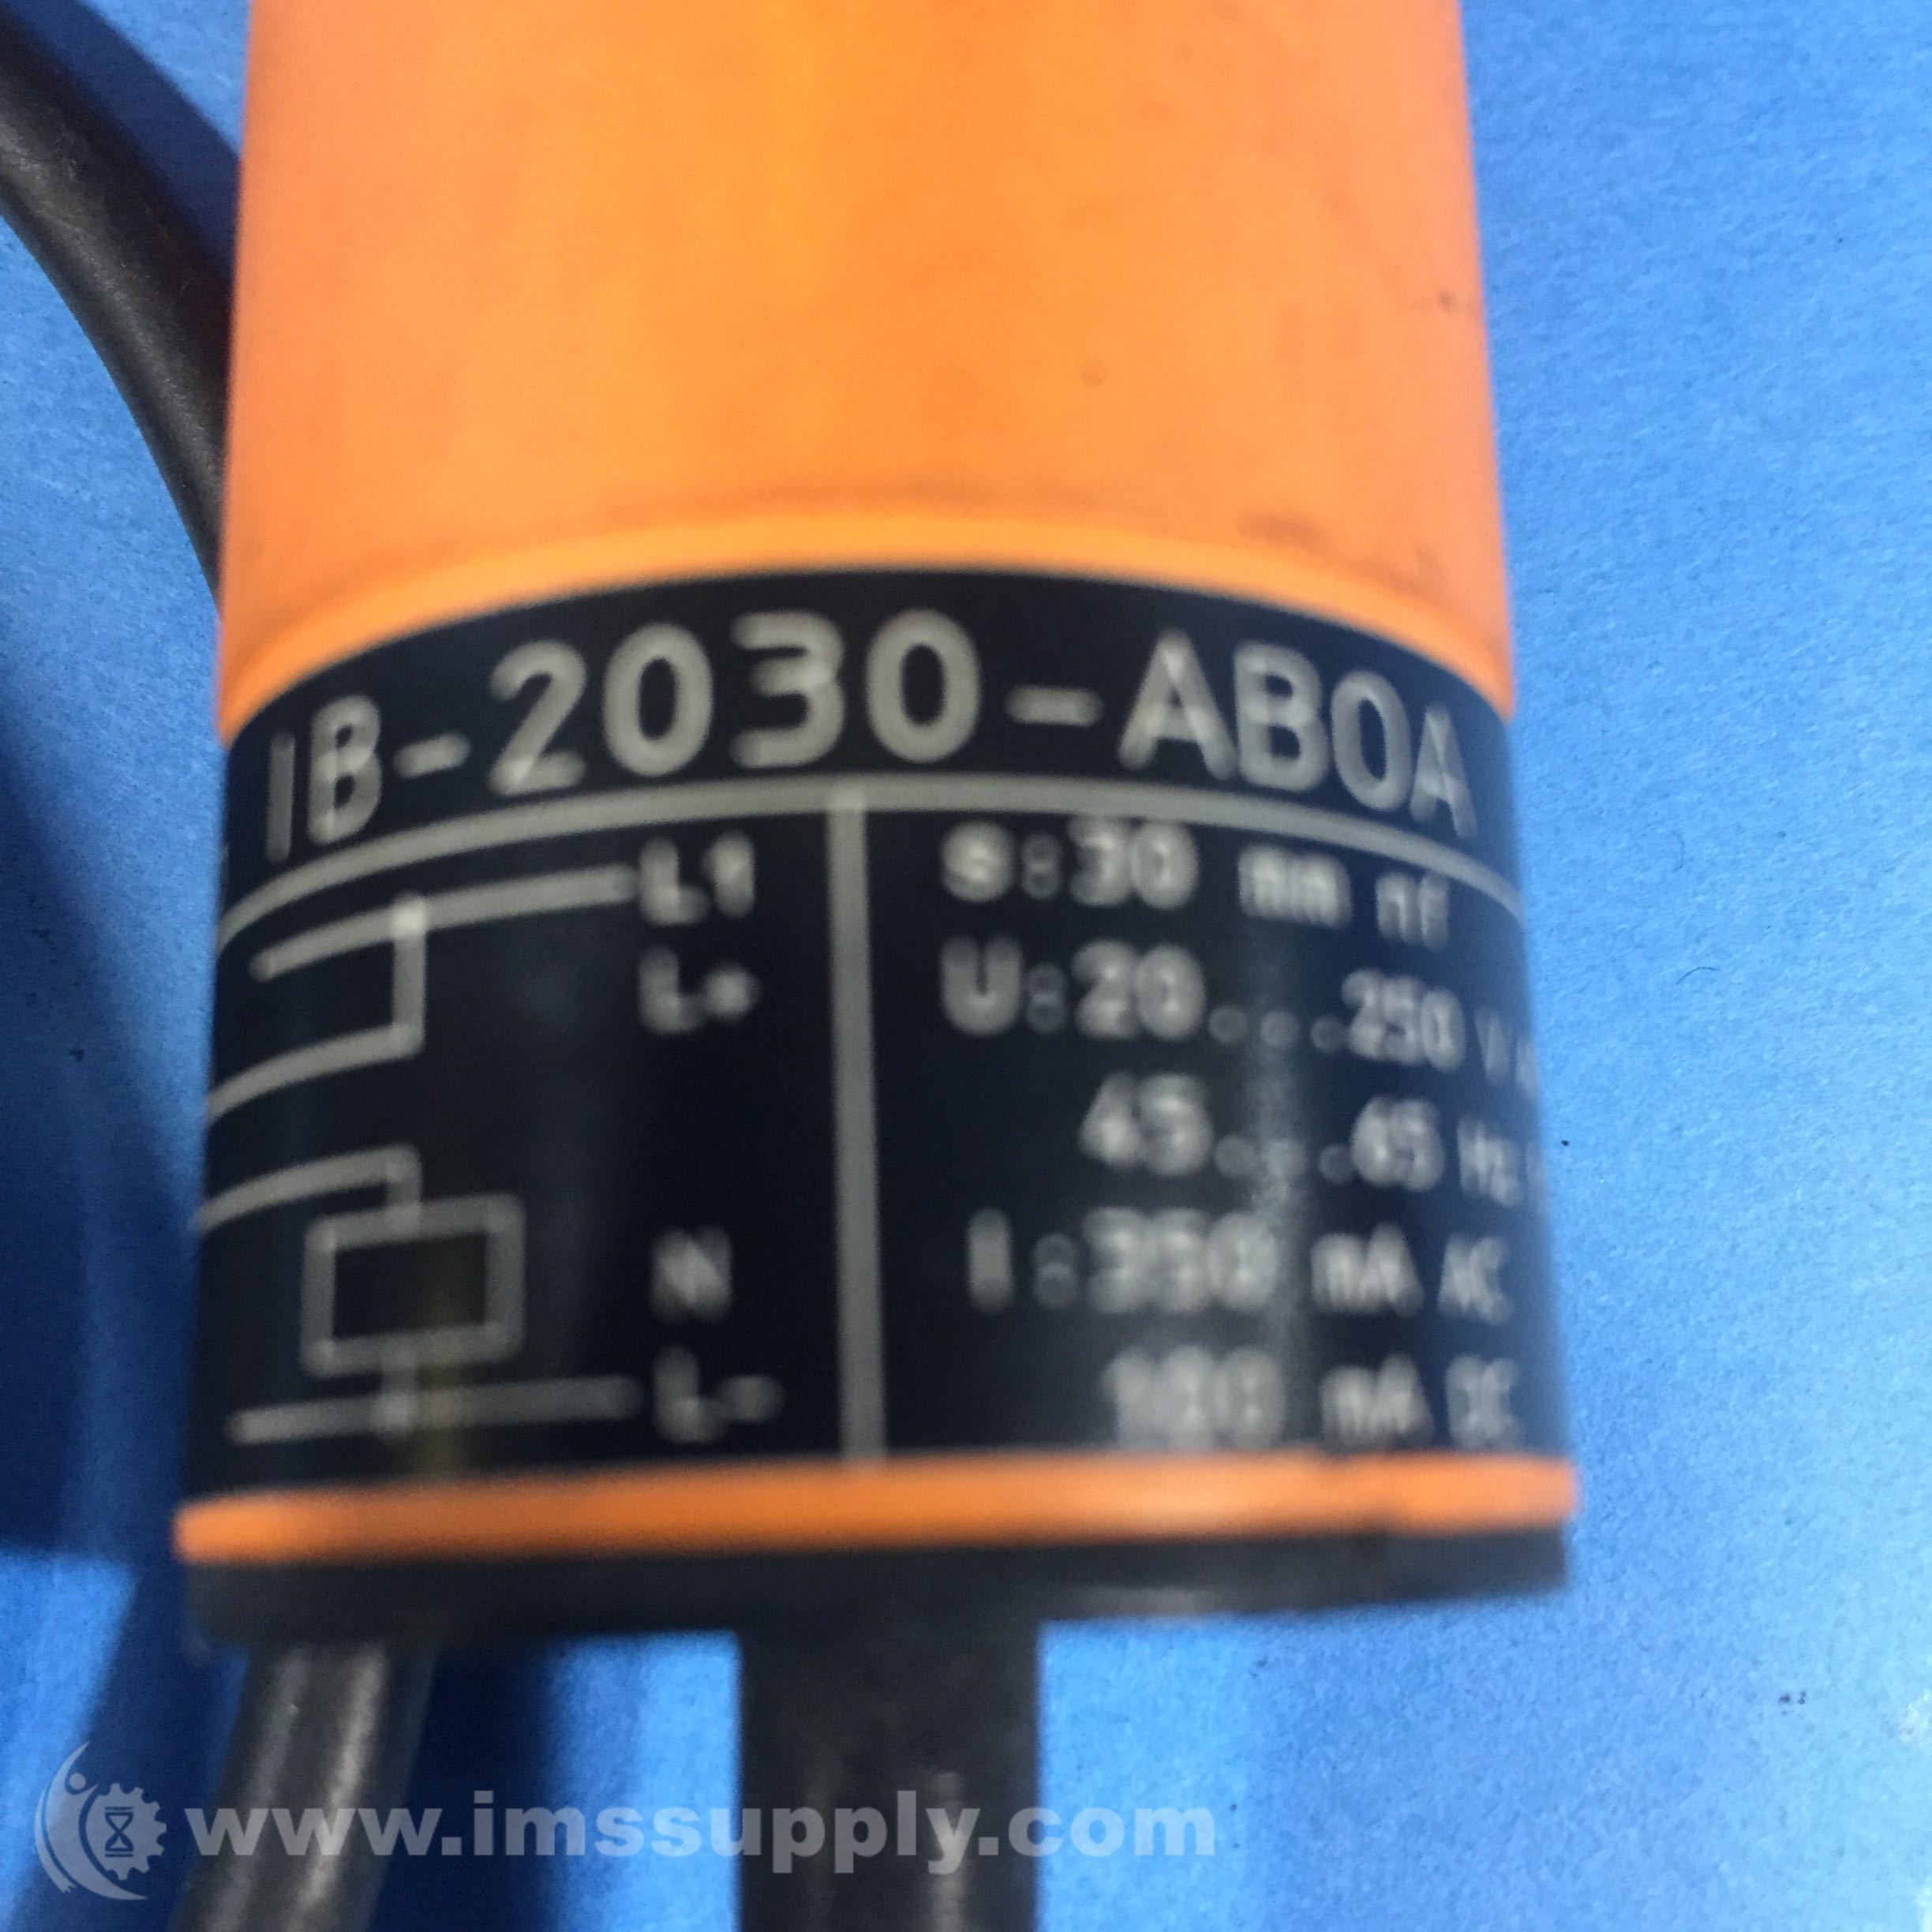 Proximity Sensor IB-2030-ABOA IFM IB0026 